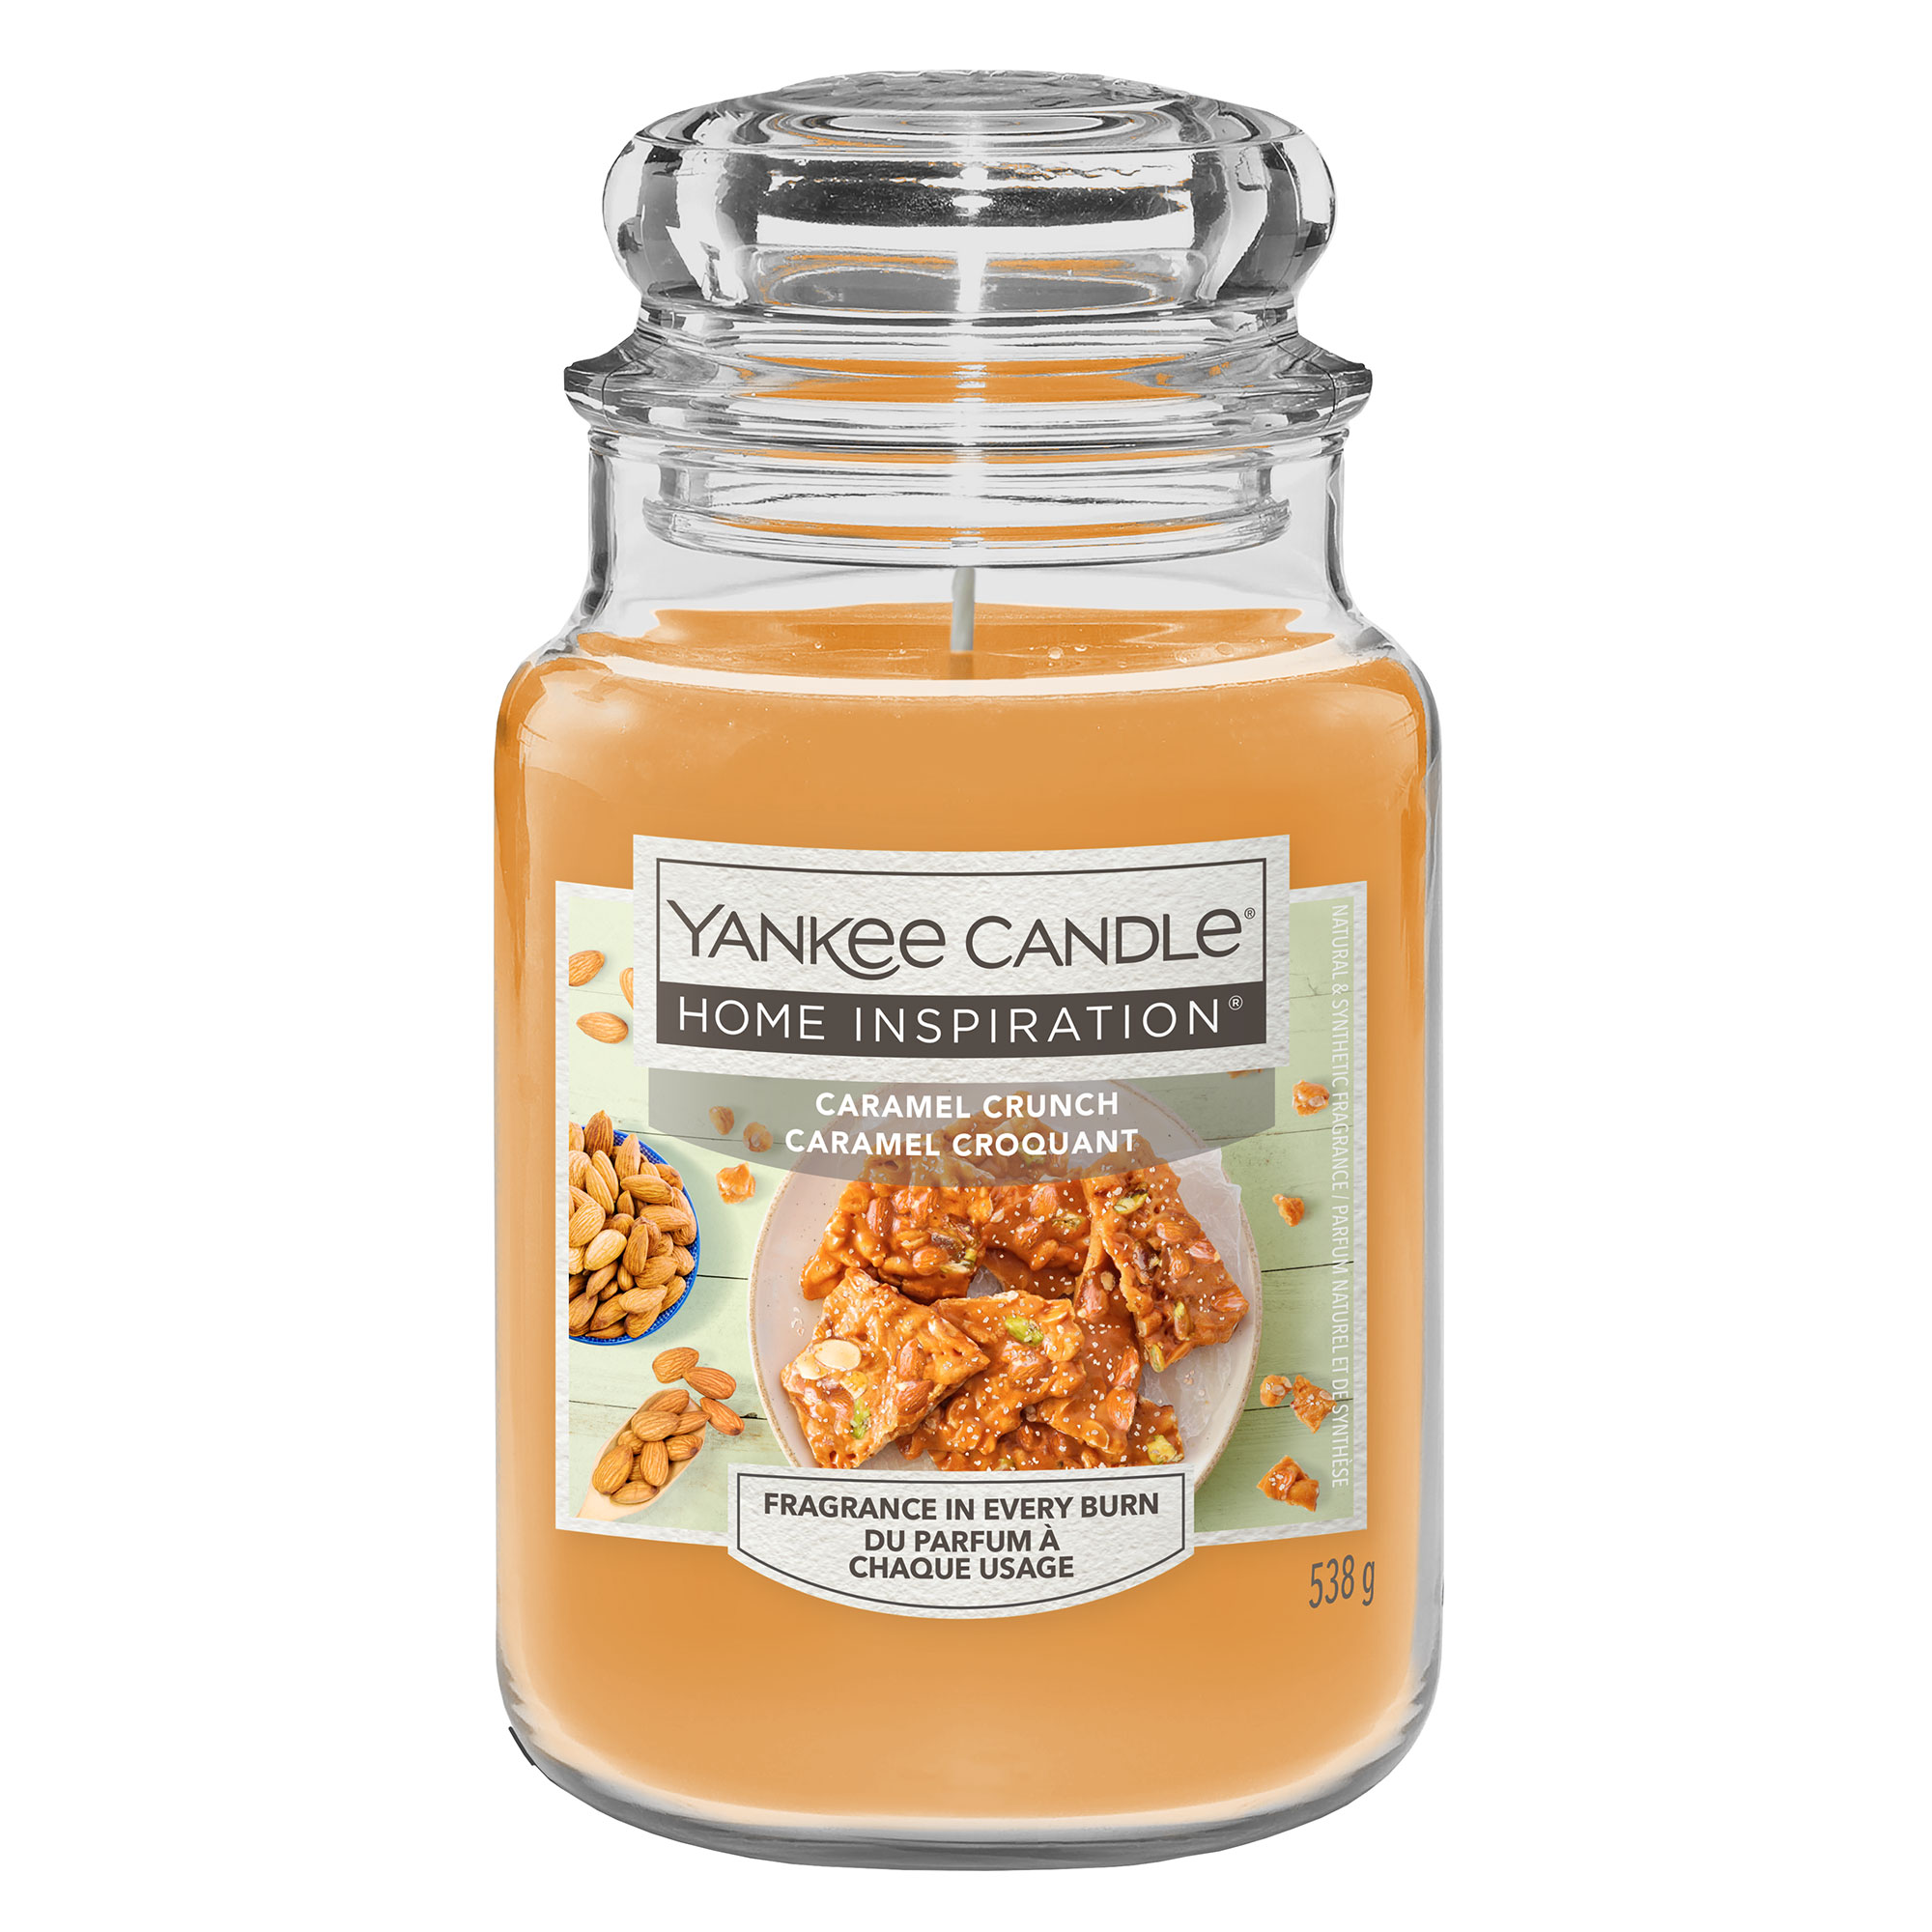 Yankee Candle Home Inspiration Caramel Crunch Large Jar